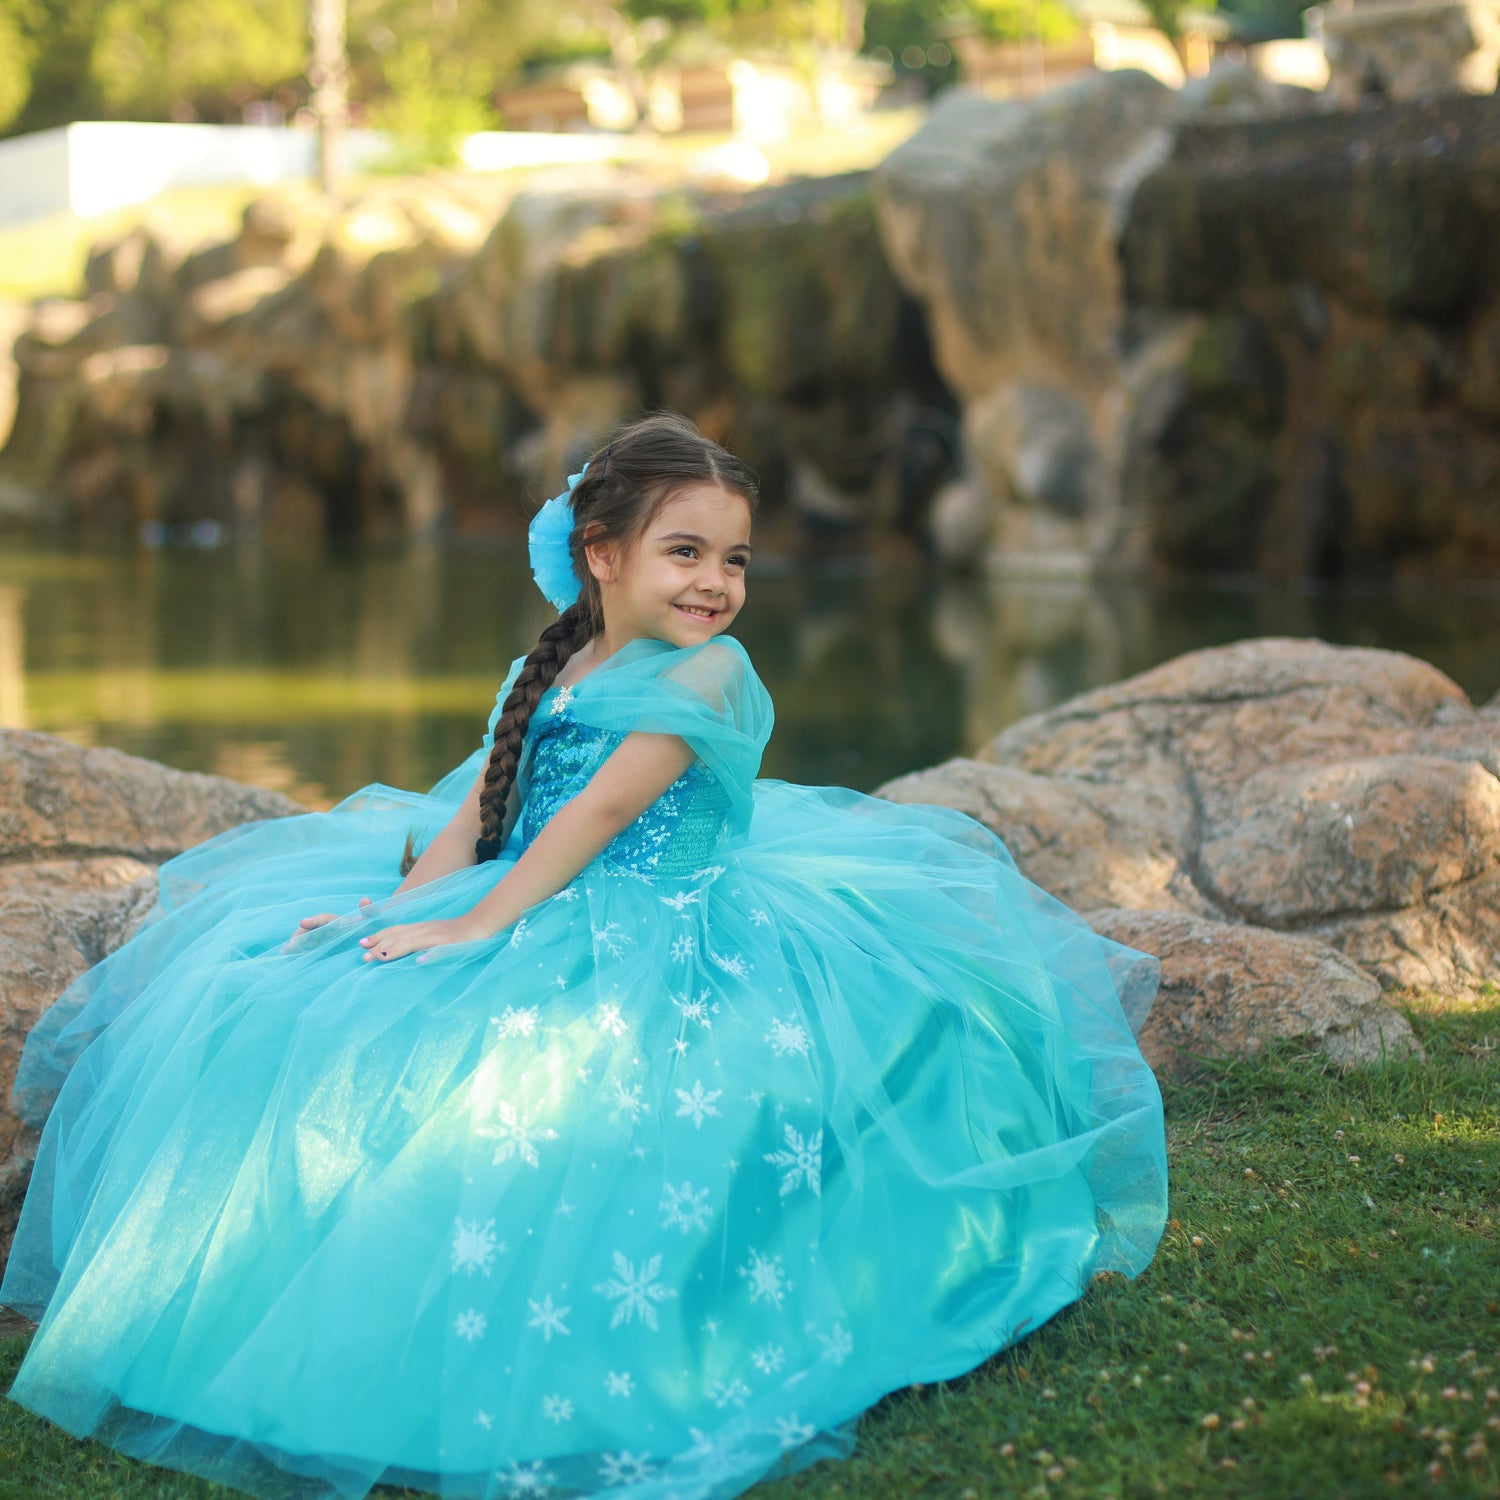 Fitto - Frozen Princess Dress Up Set - Blue